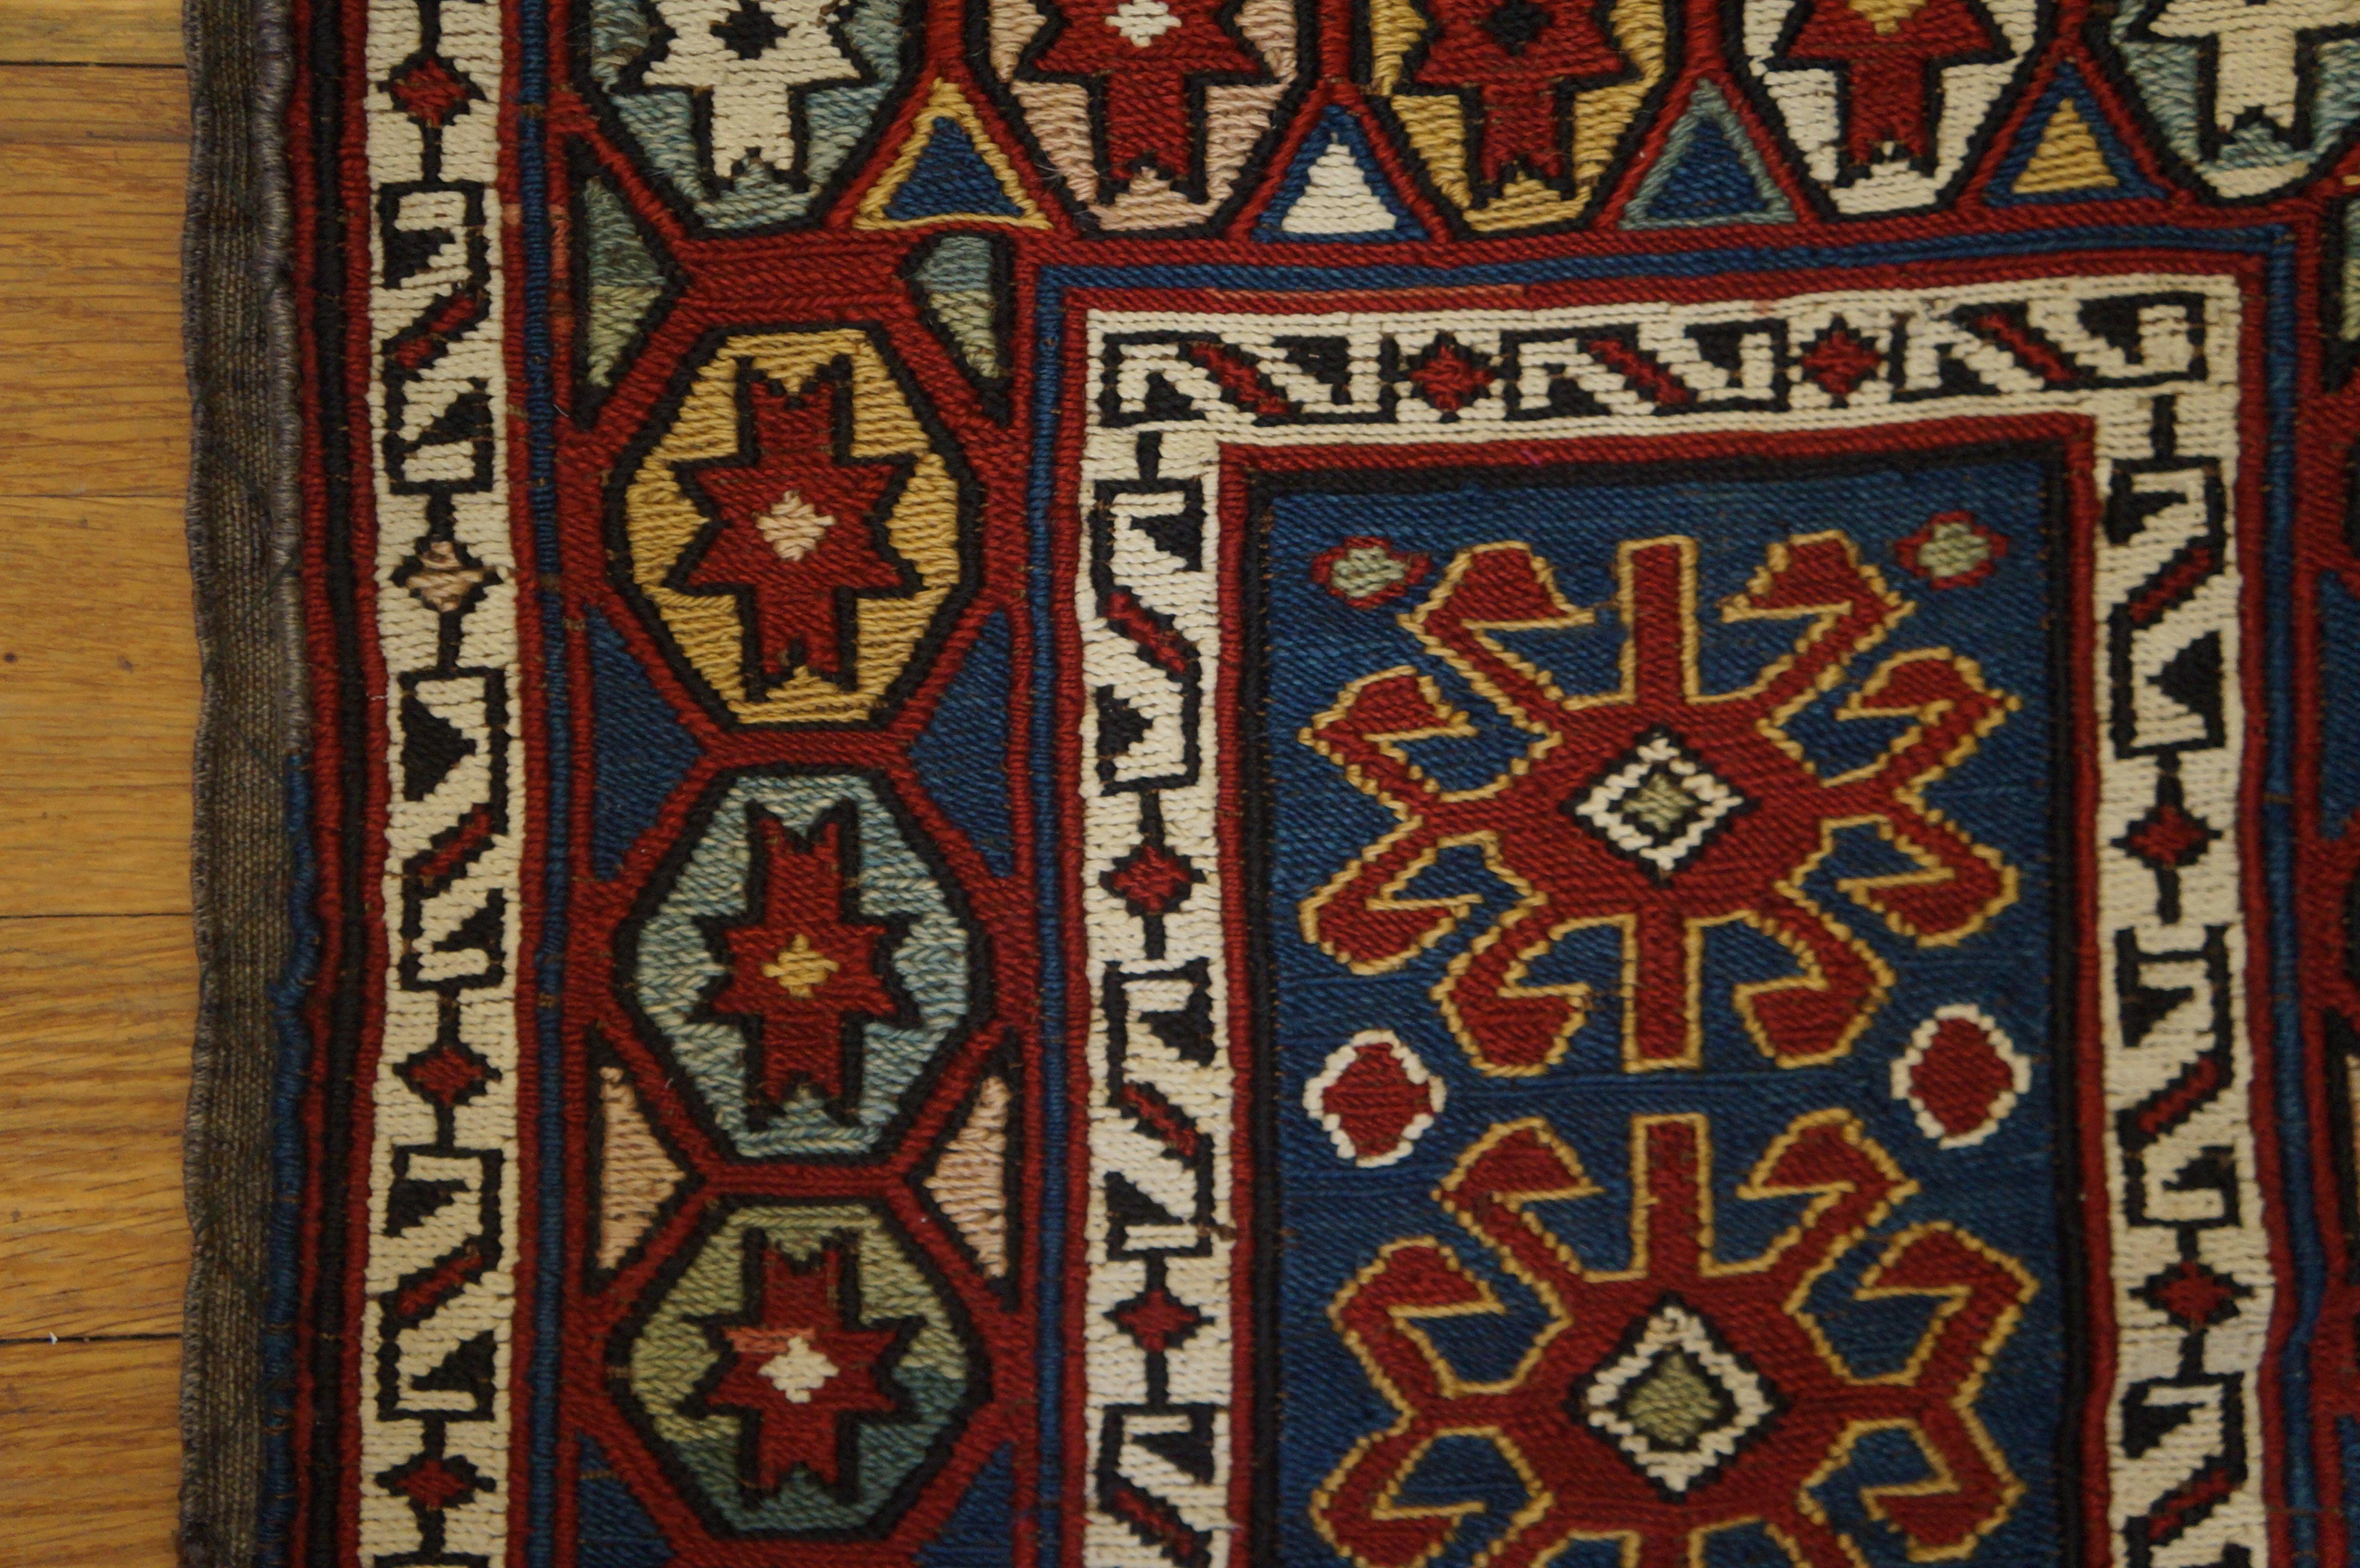 Antique Pesian - Soumak rug. Measures: 1'4